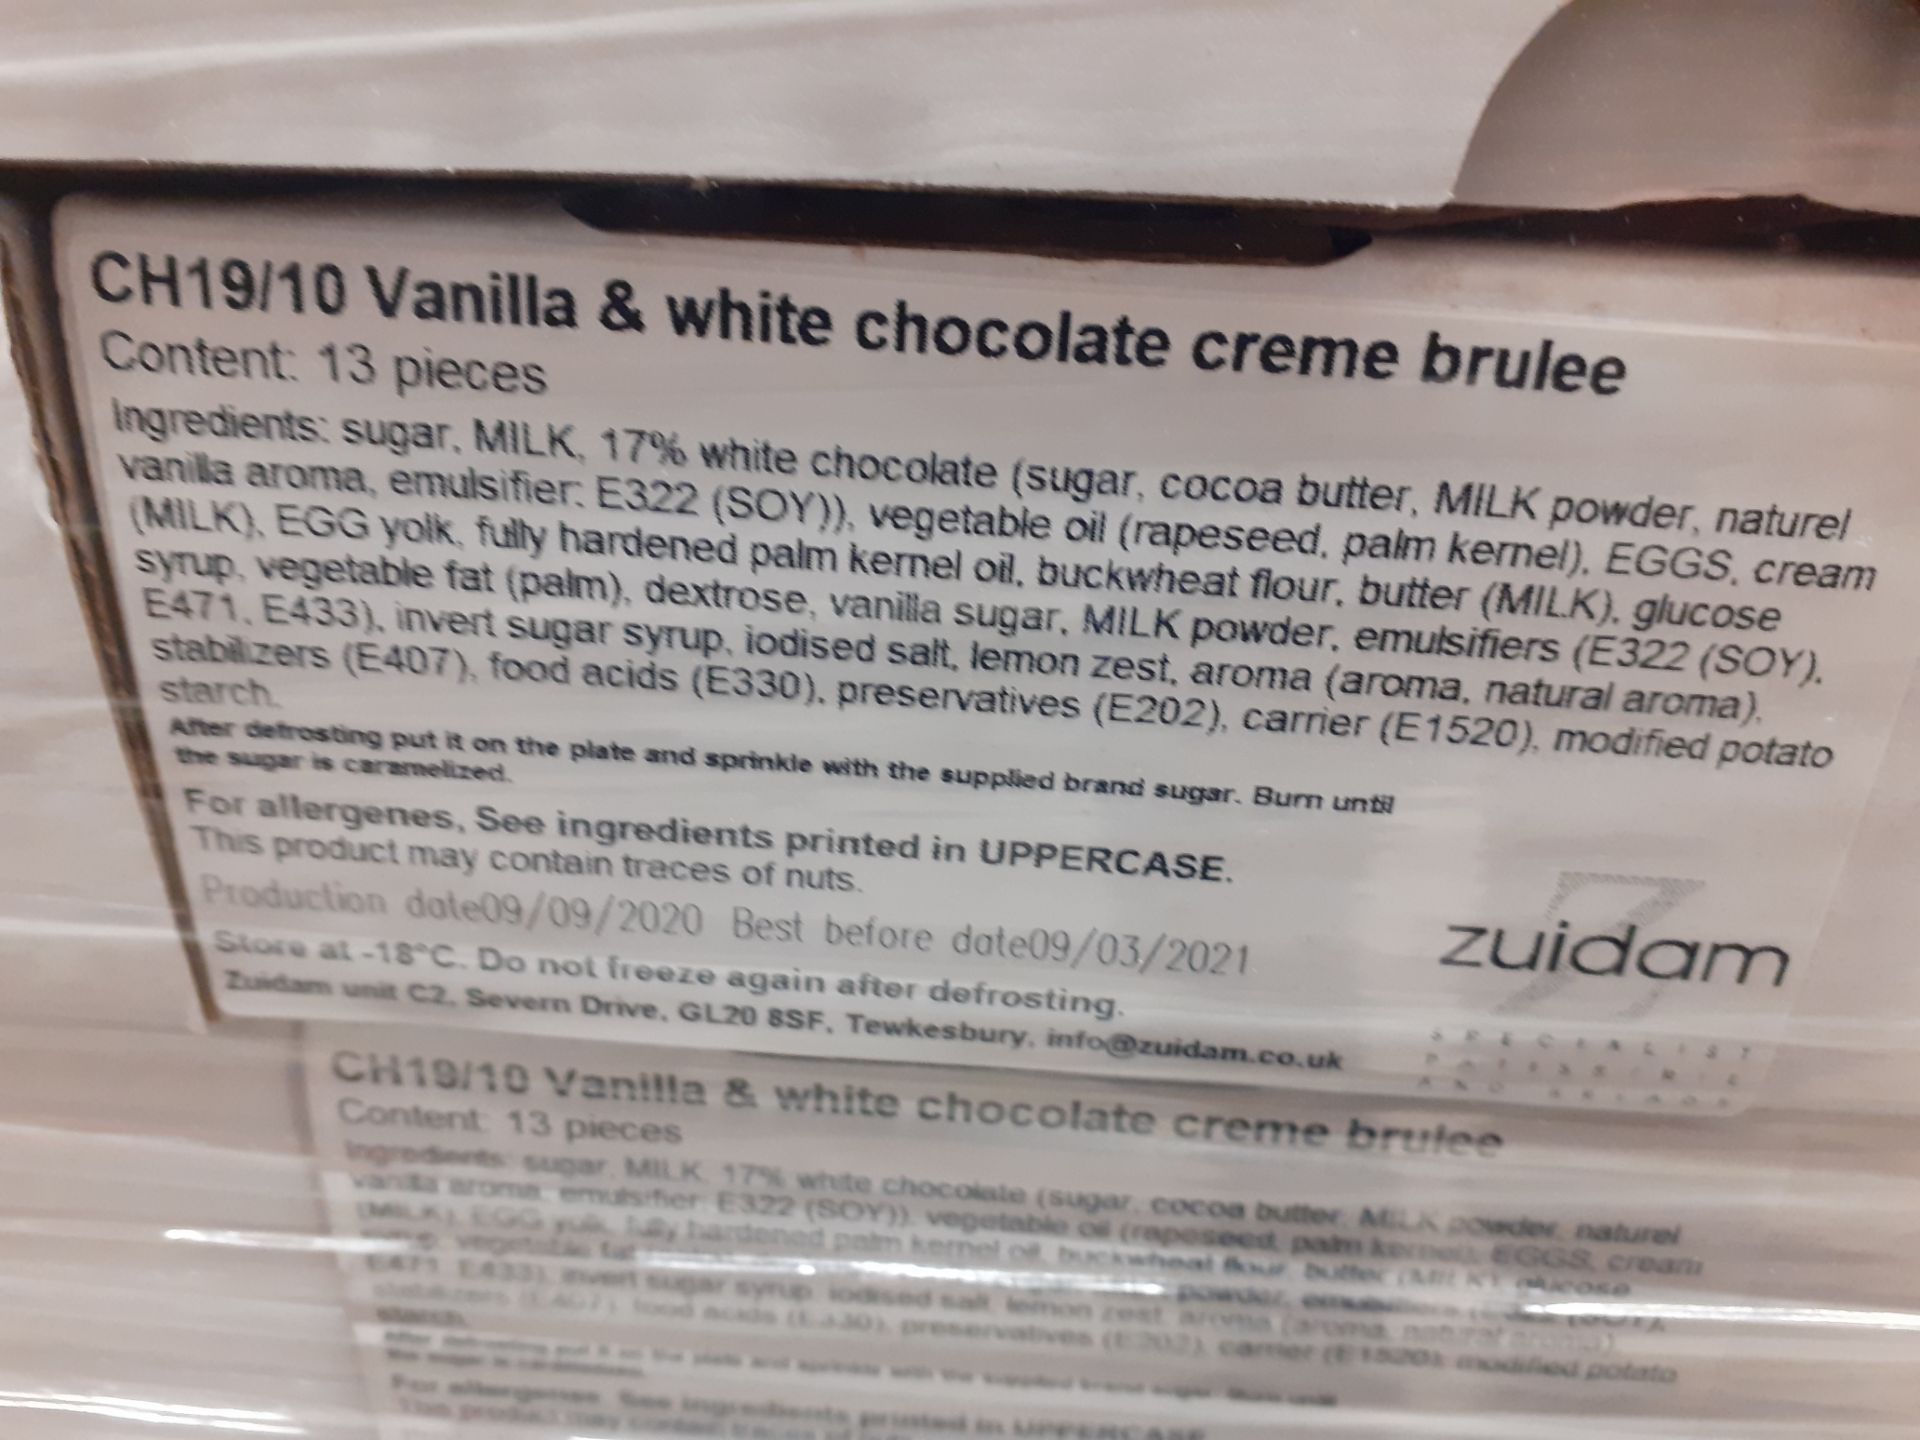 200 x CH19/10 Vanilla & white chocolate creme brul - Image 3 of 3